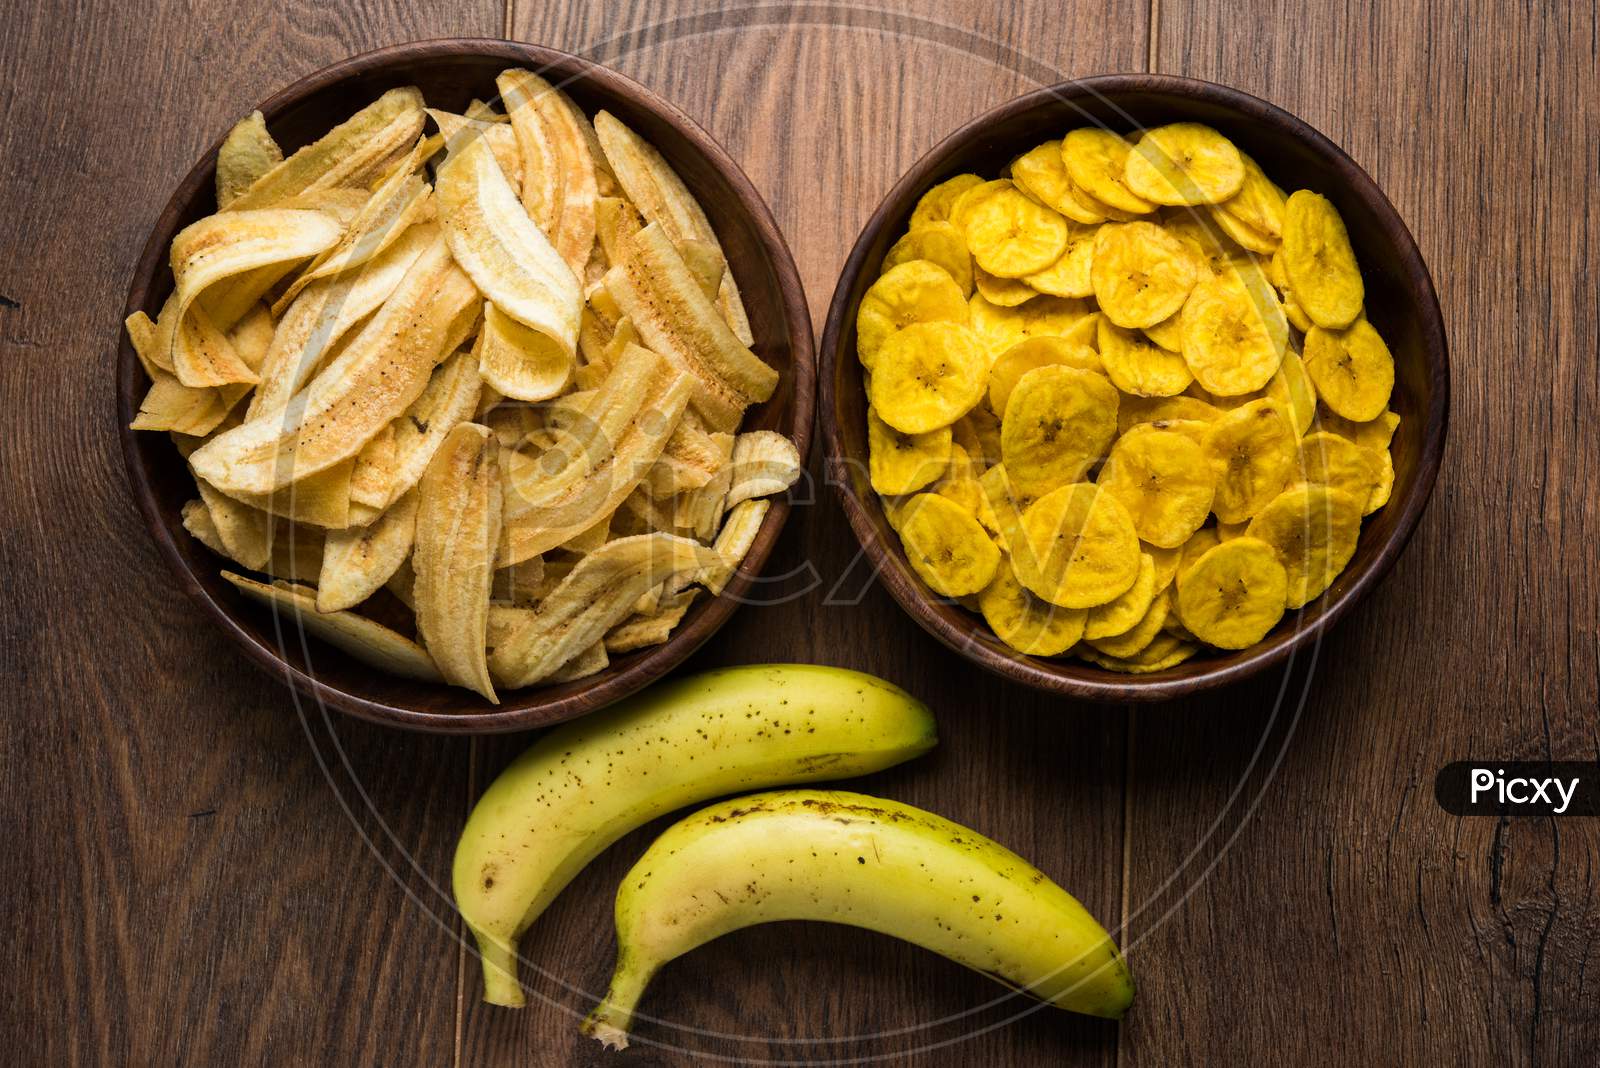 Kela or Banana chips or wafers